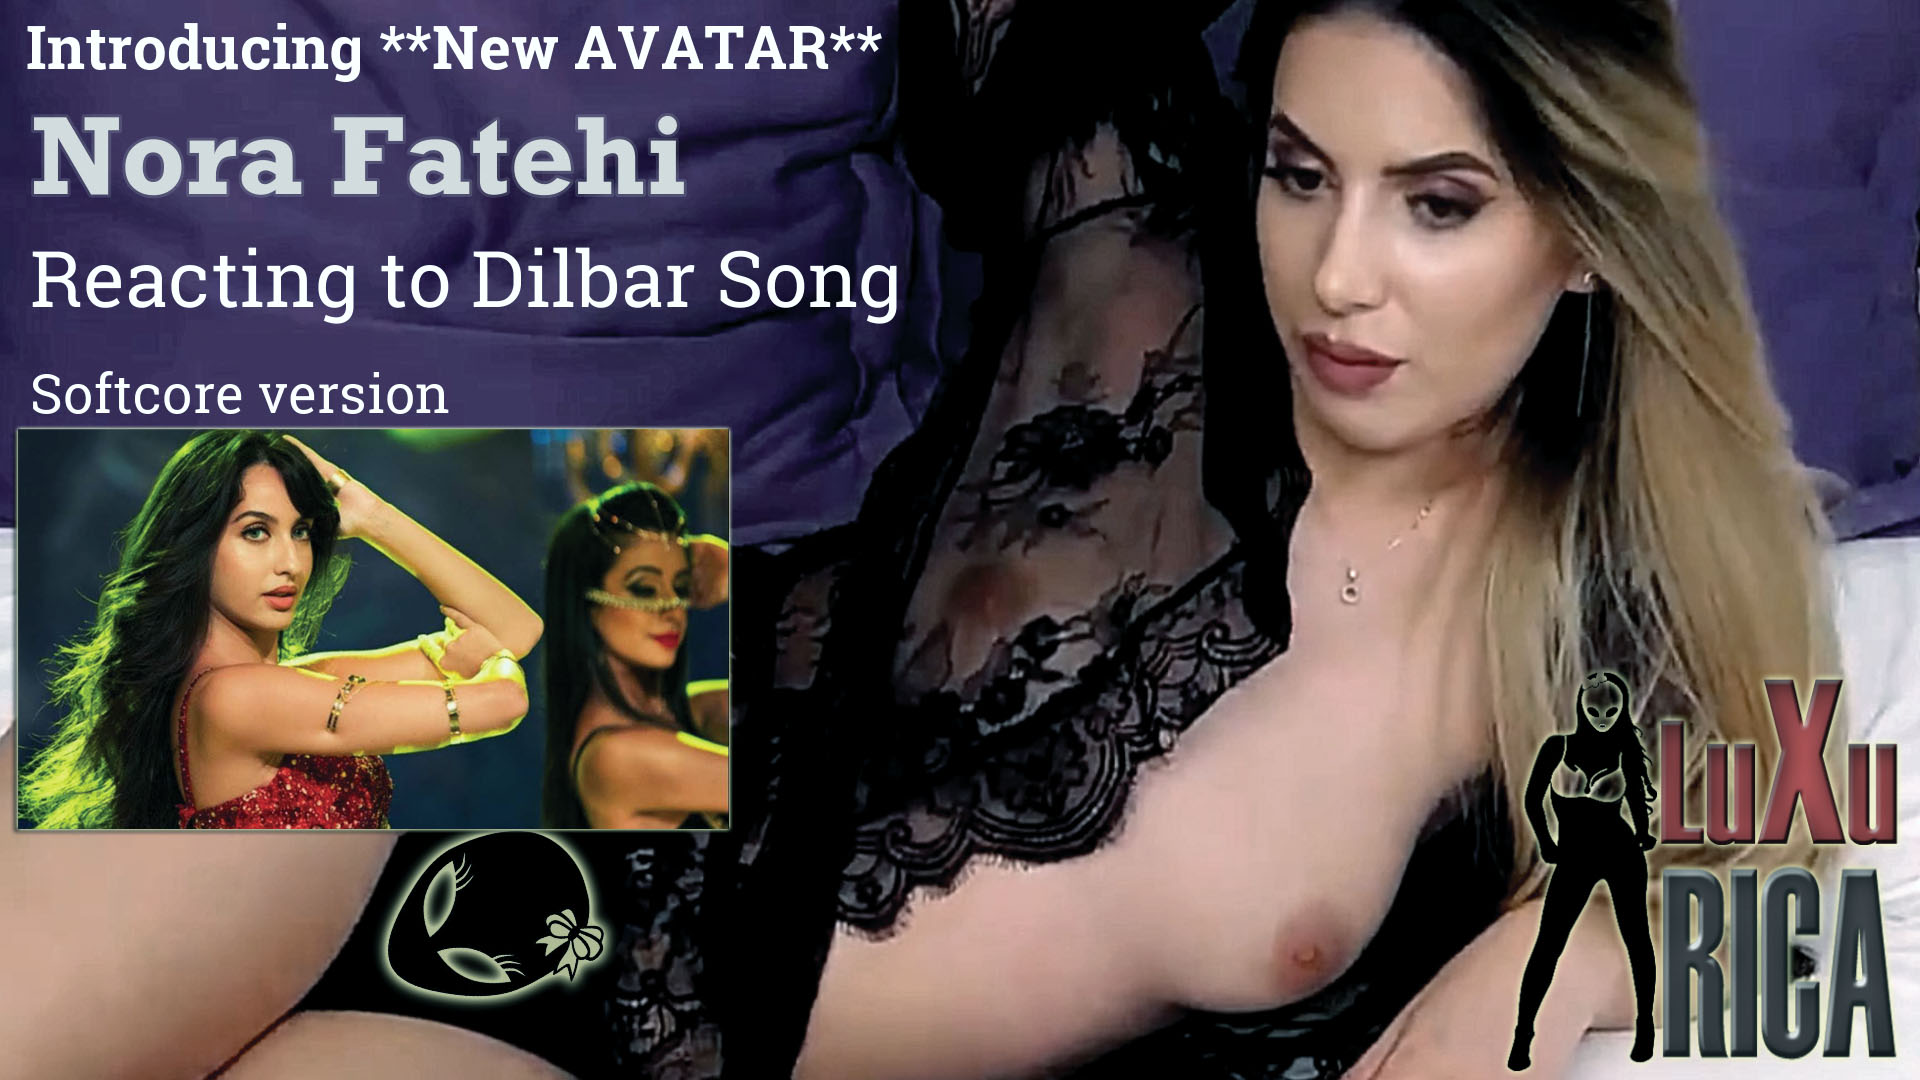 (◕‿◕✿)[LUXURICA] Introducing NORA FATEHI Avatar Feat. Dilbar Music Video <SoftCore>